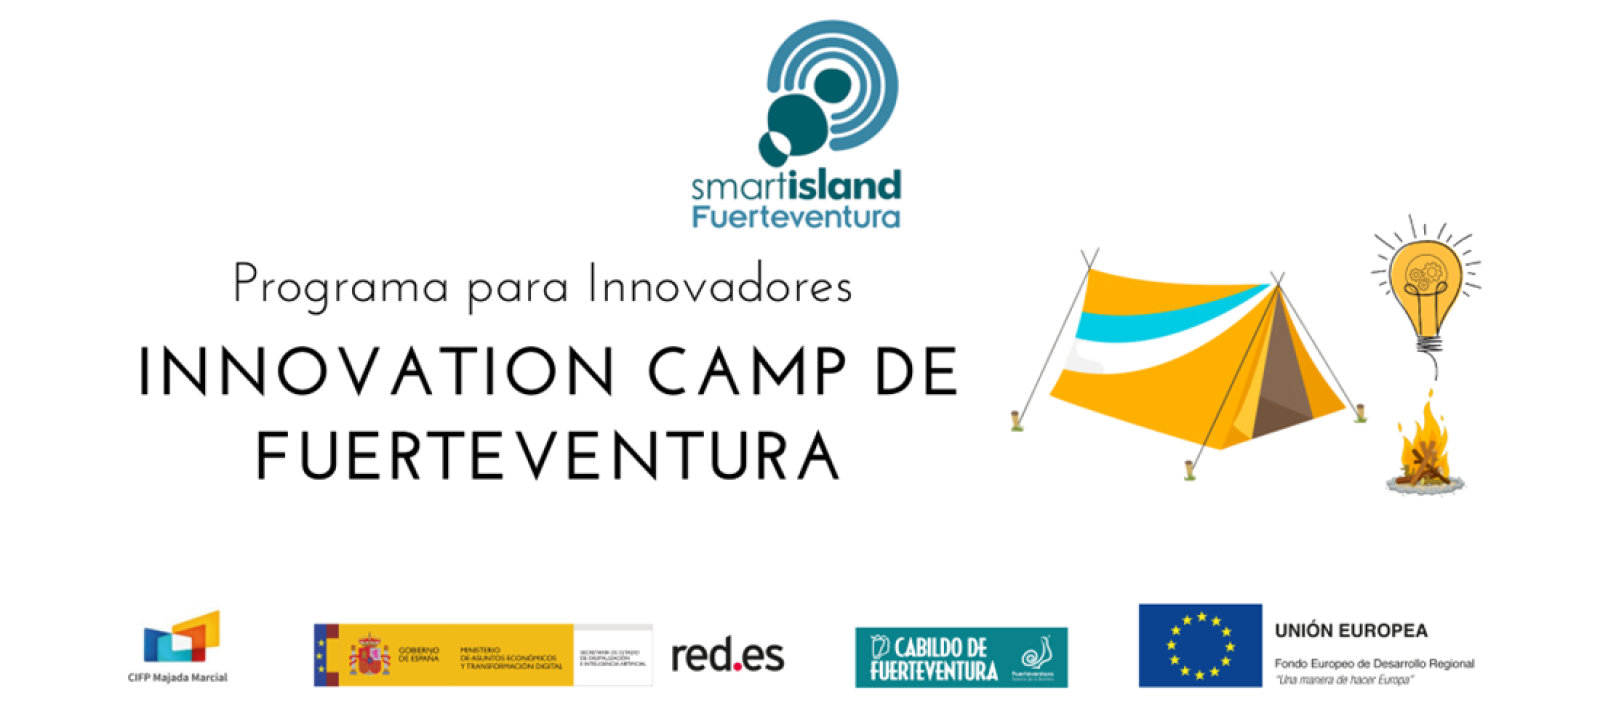 Innovation camp